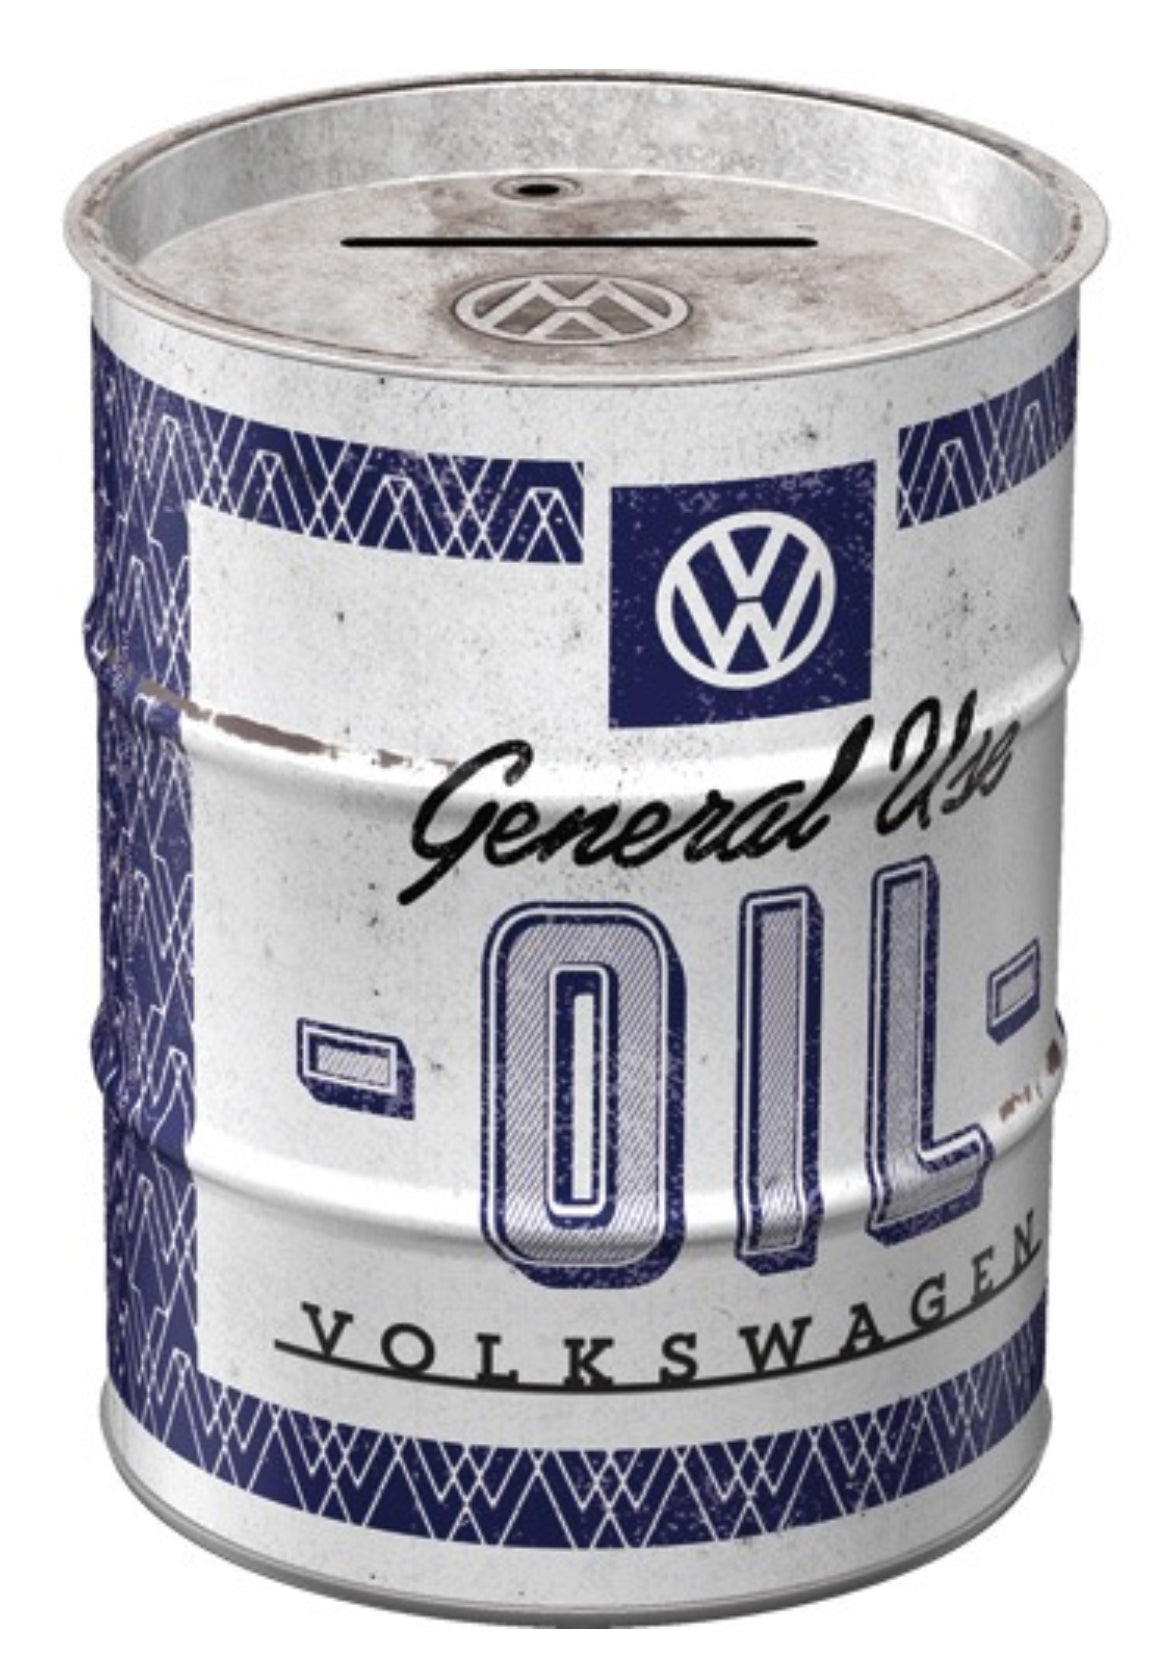 Spardose "VW General Use Oil"